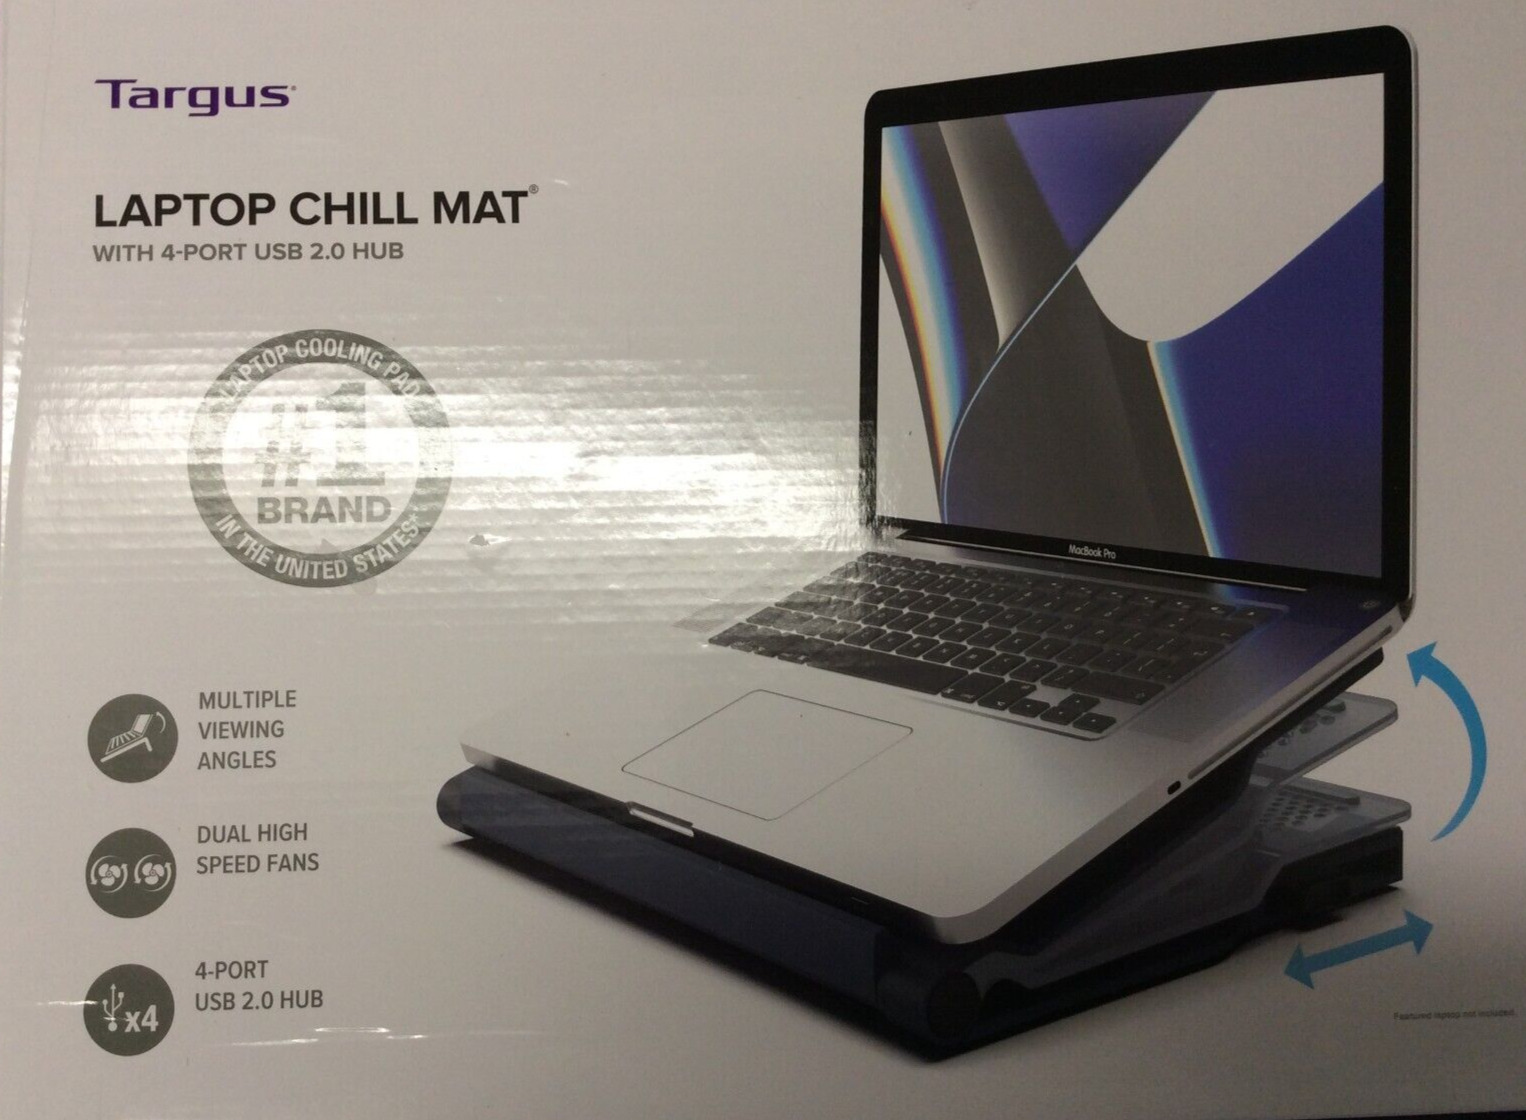 Laptop Chill Mat with 4-Port USB 2.0 Hub (Targus)